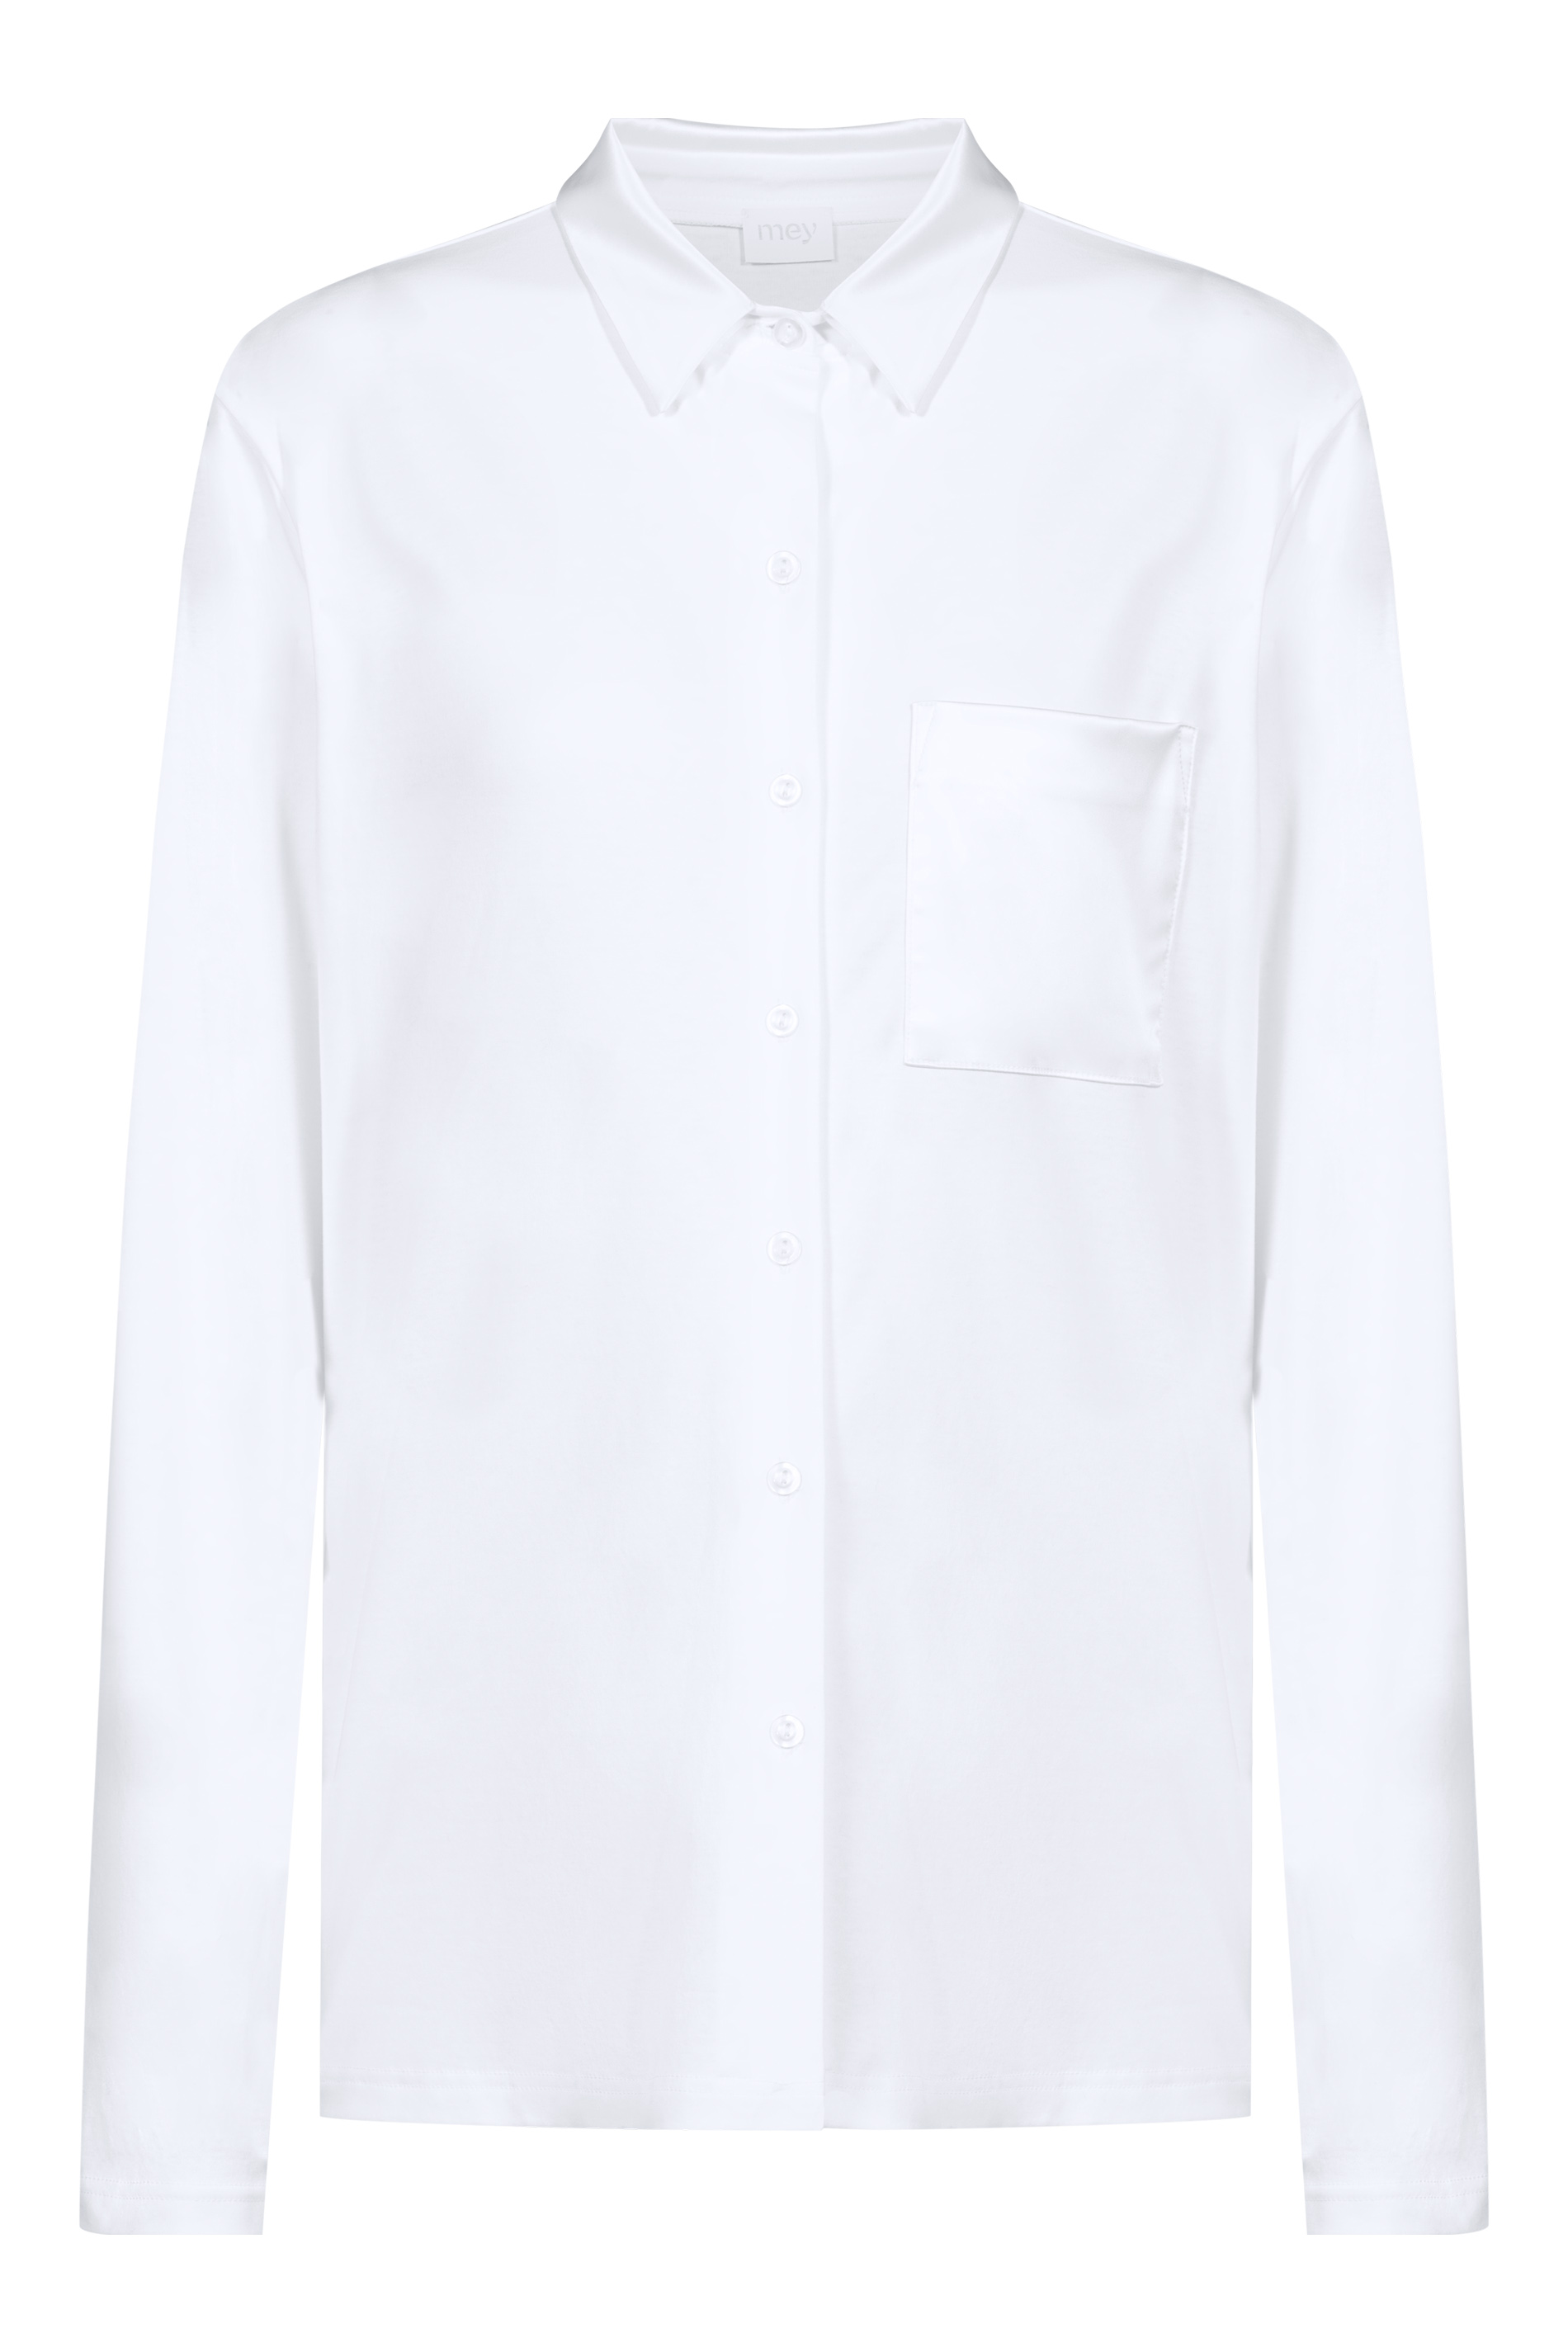 Pyjama shirt White Serie Sleepsation Cut Out | mey®